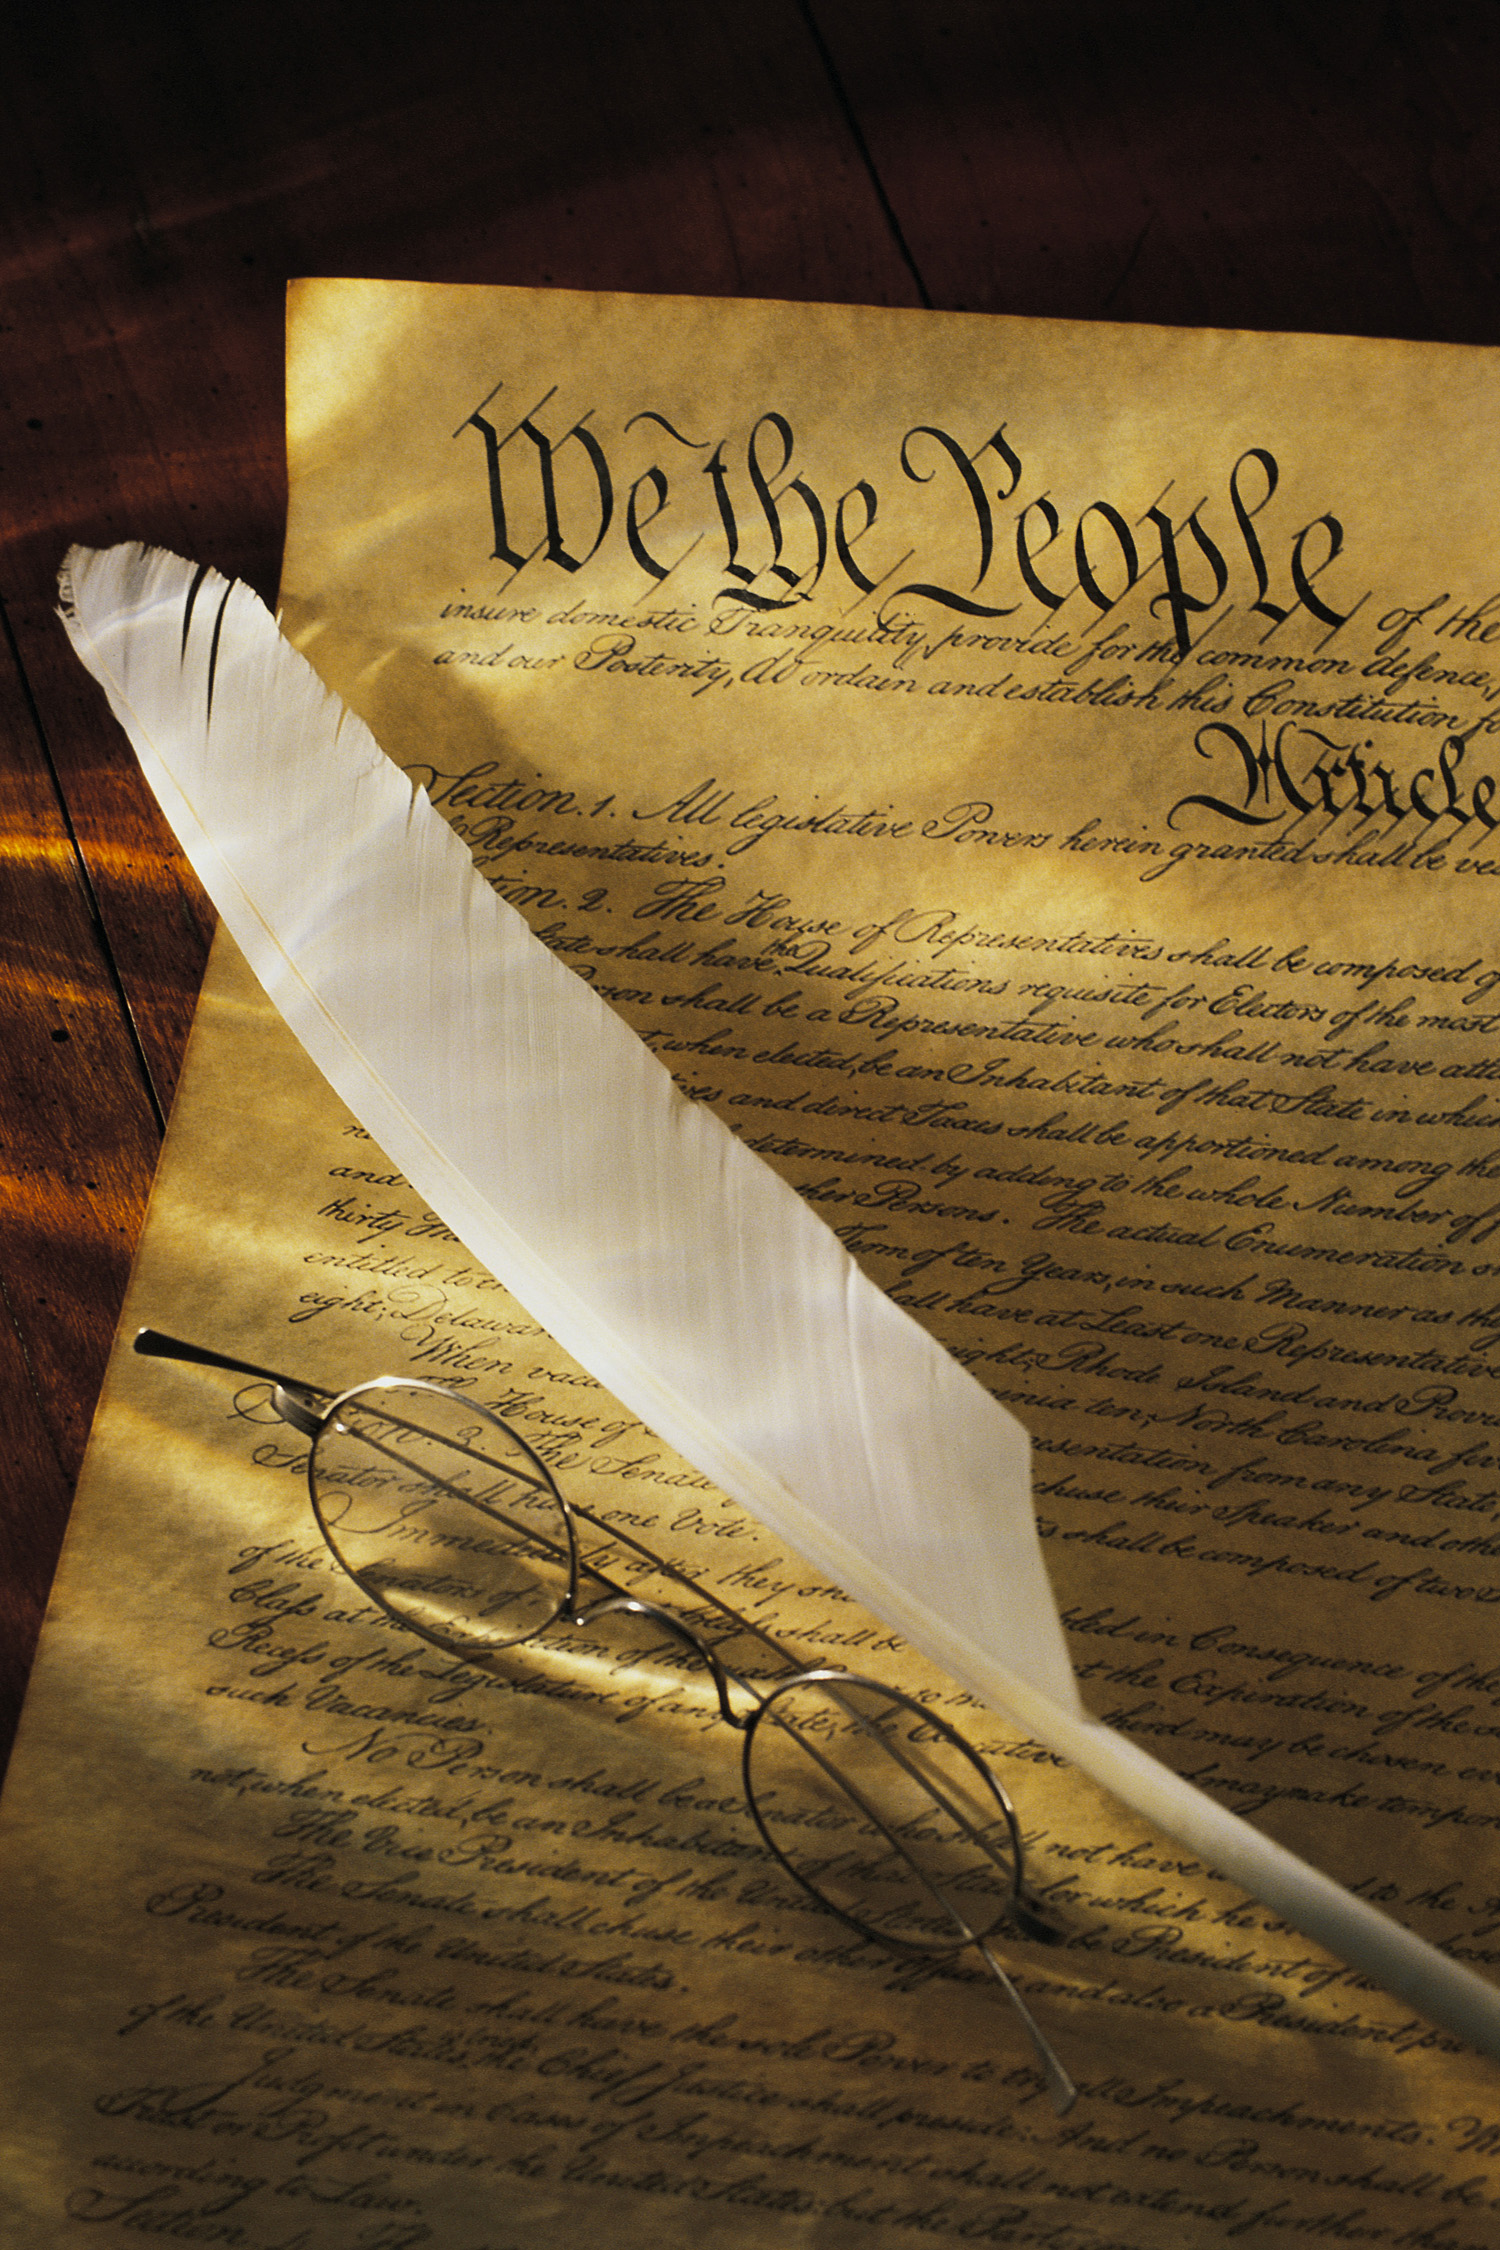 The US Constitution.